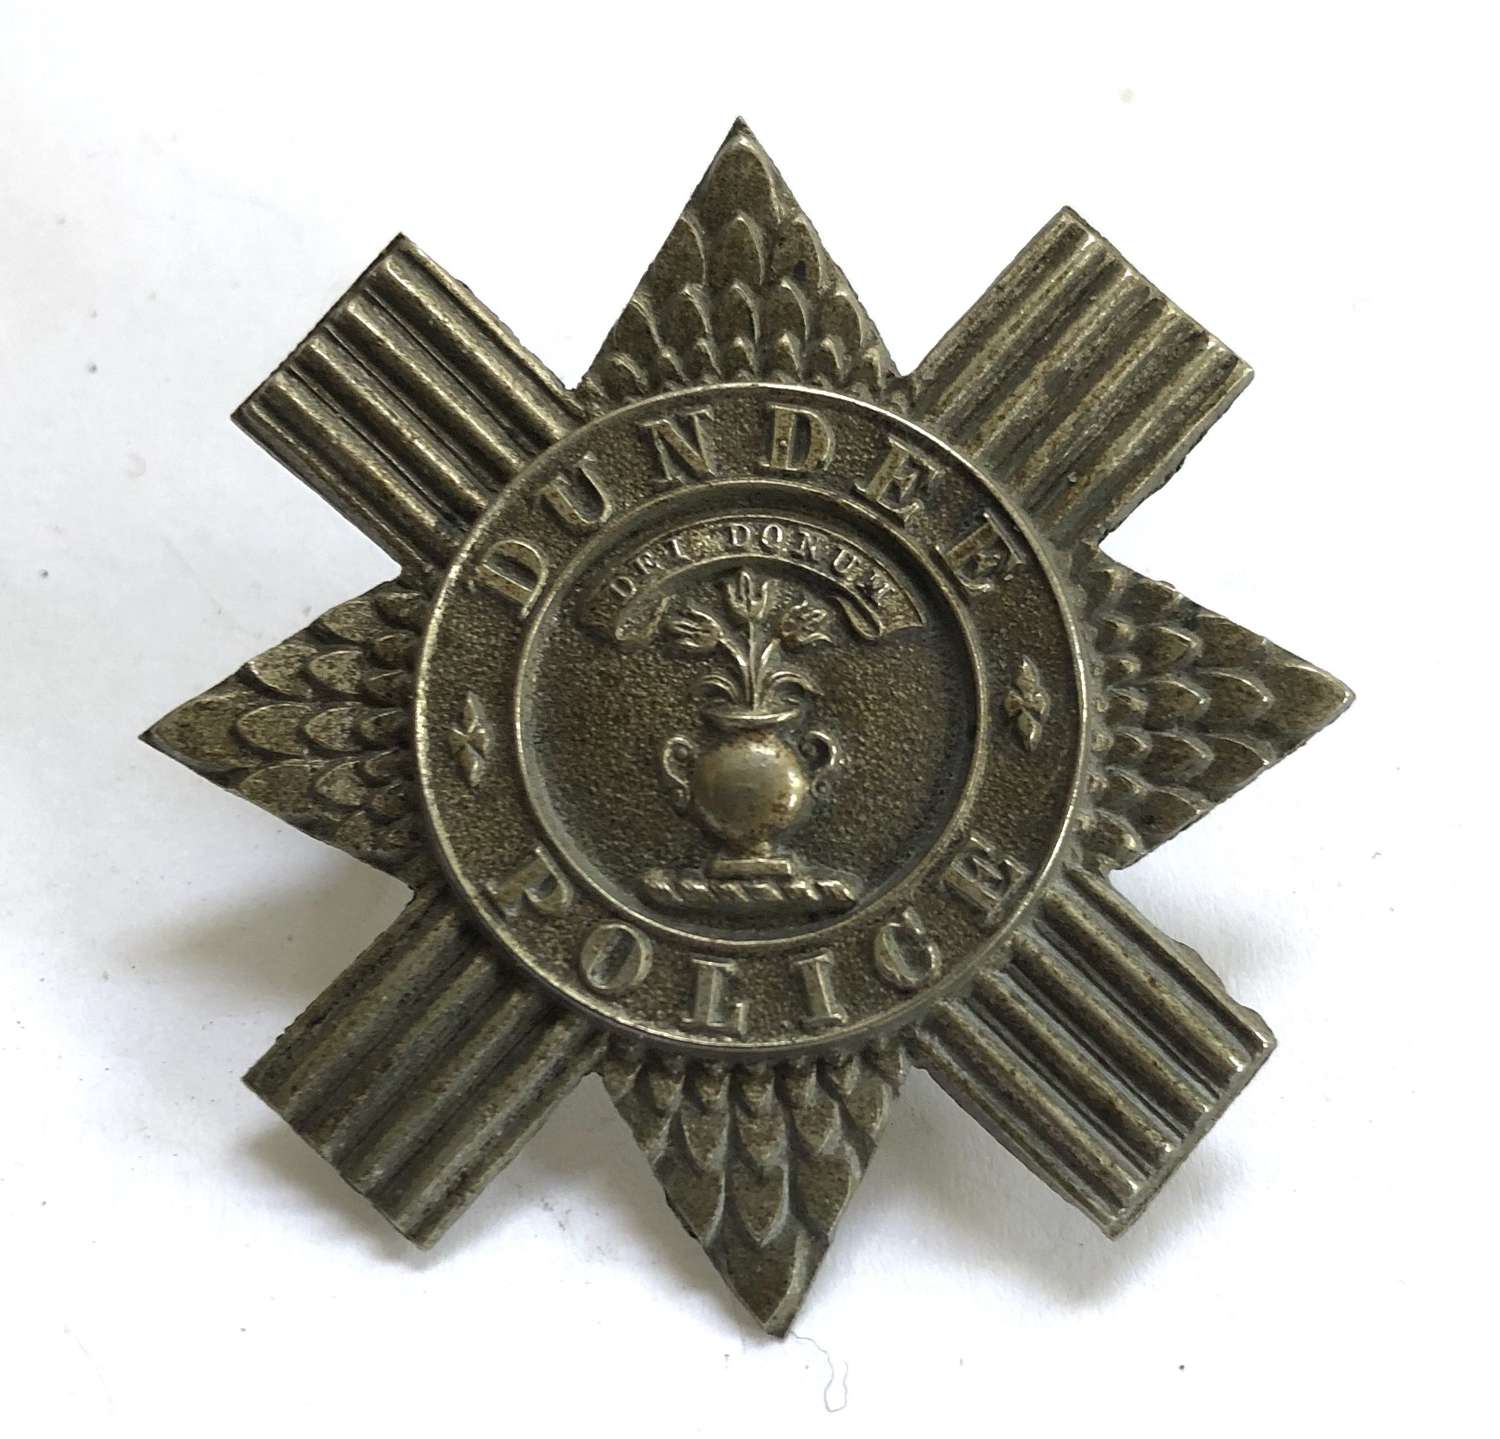 Dundee Police early headdress badge